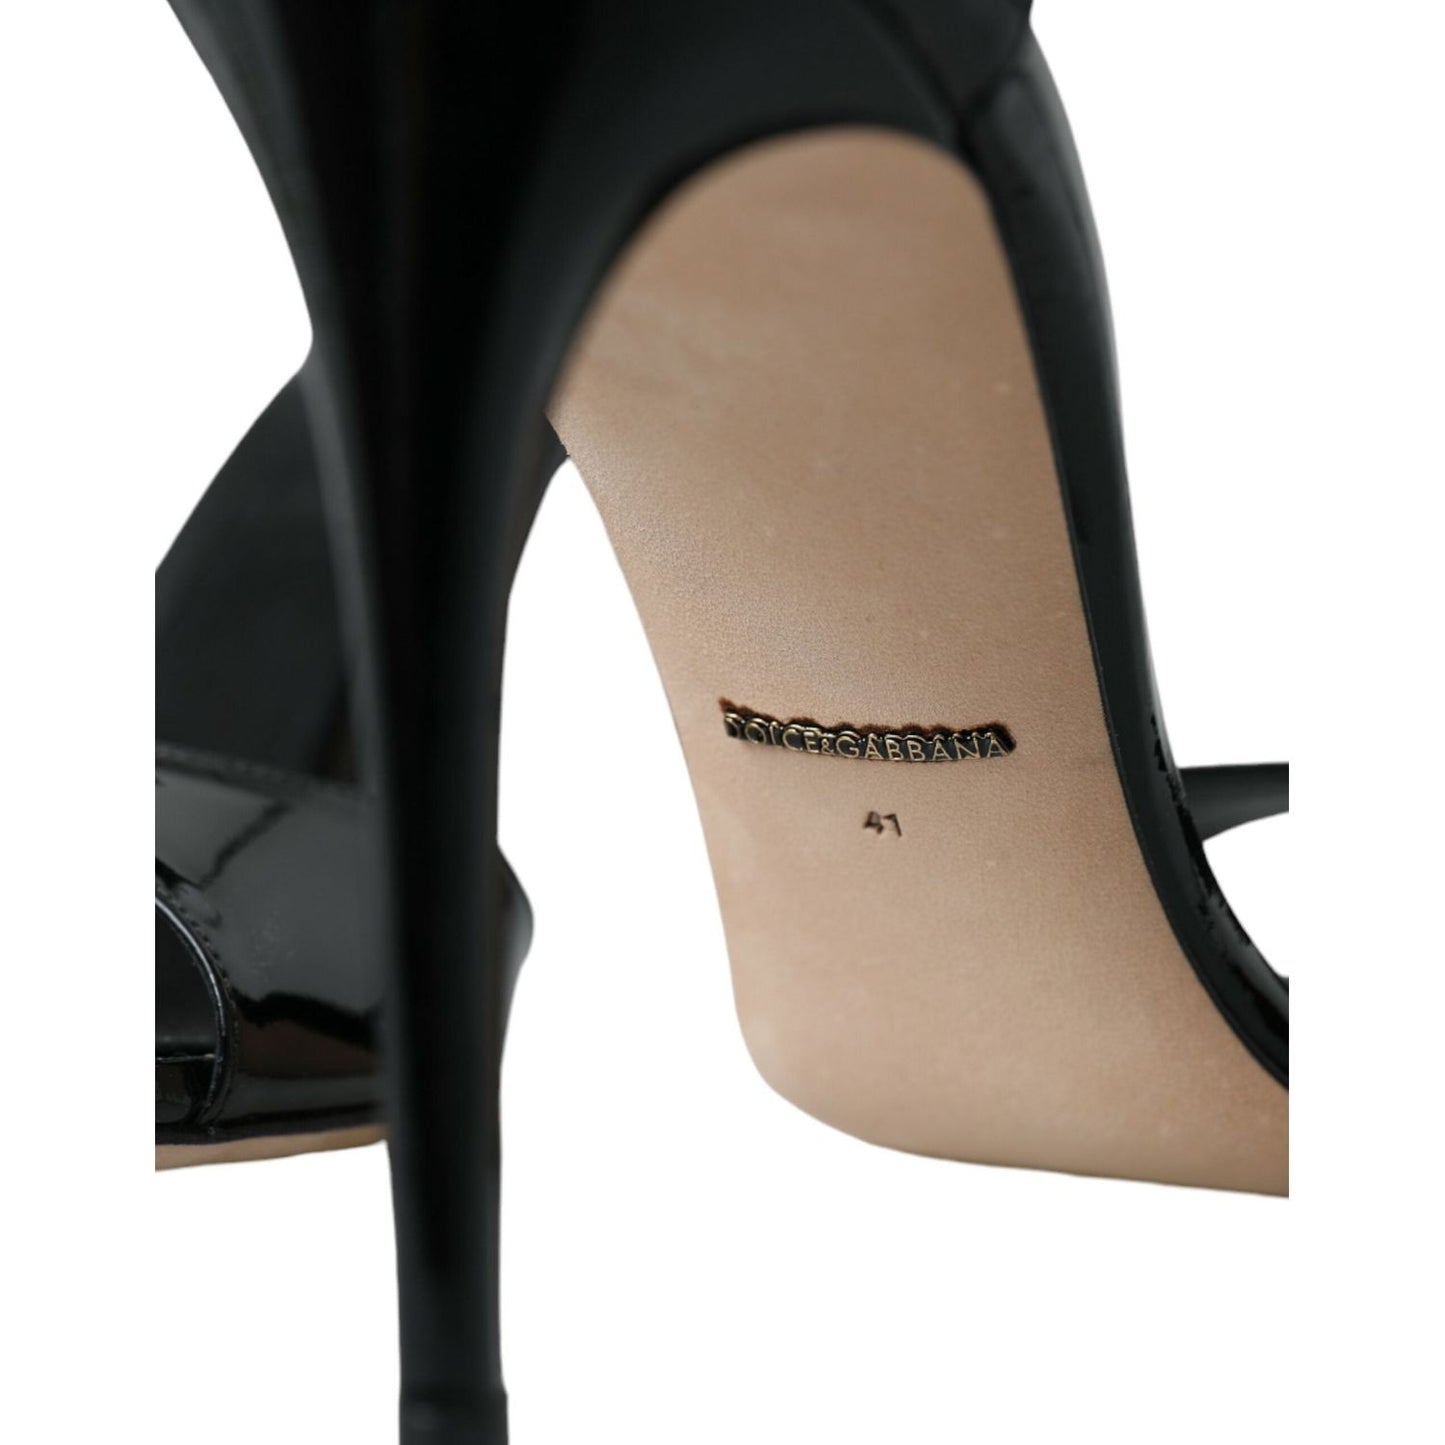 Dolce & Gabbana Black KEIRA Leather Heels Sandals Shoes black-keira-leather-heels-sandals-shoes